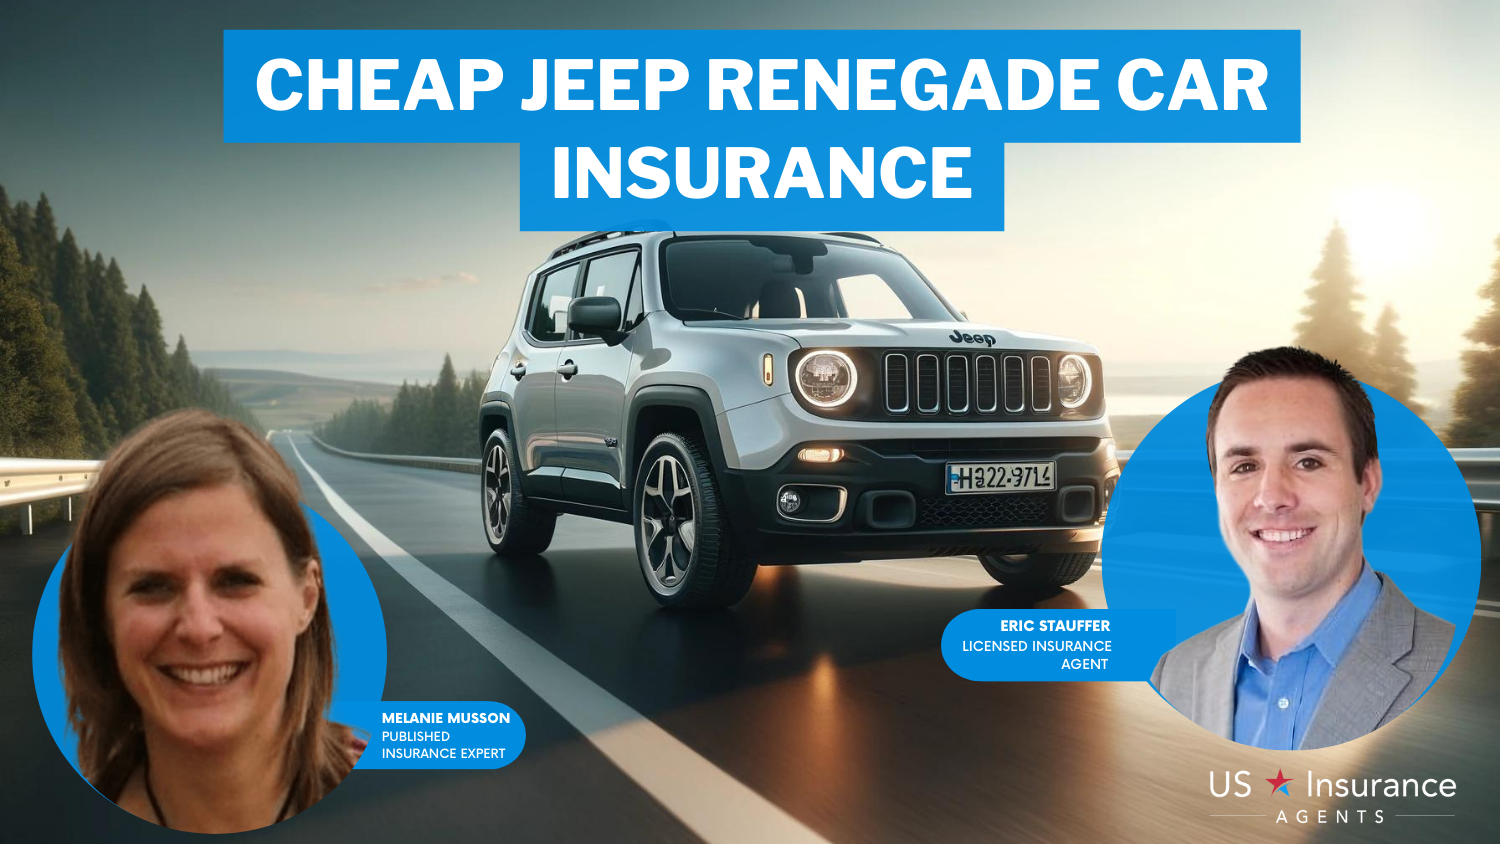 Cheap Jeep Renegade Car Insurance: Progressive, Liberty Mutual, and State Farm